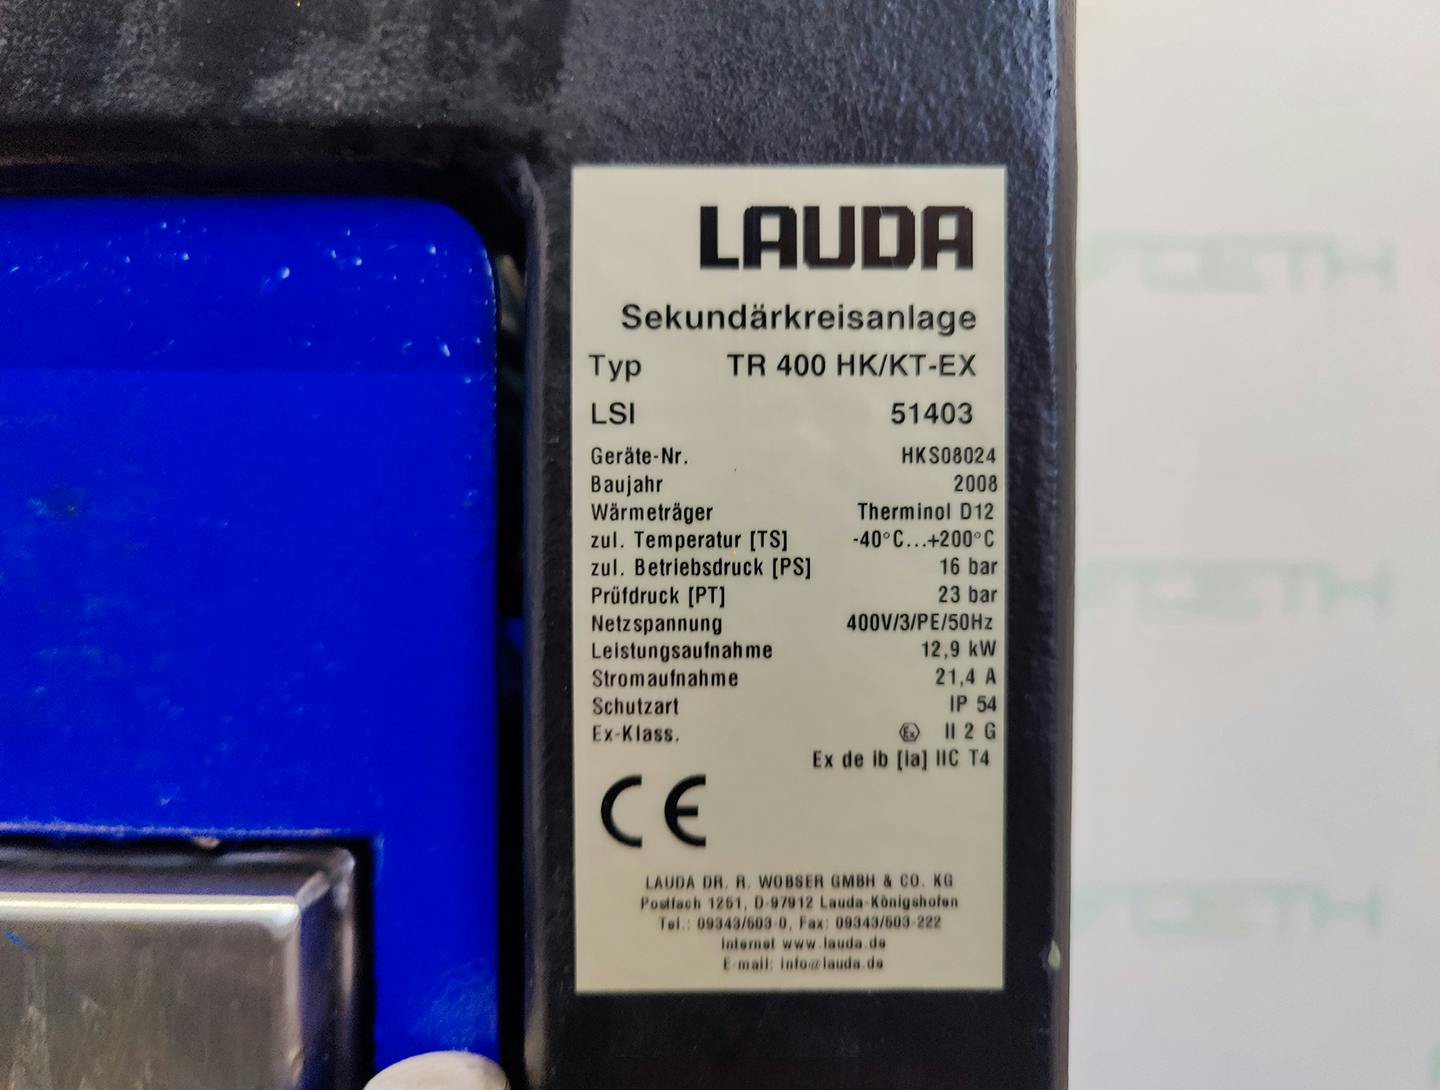 Lauda TR400 HK/KT-EX "secondary circuit system" - Thermorégulateur - image 5